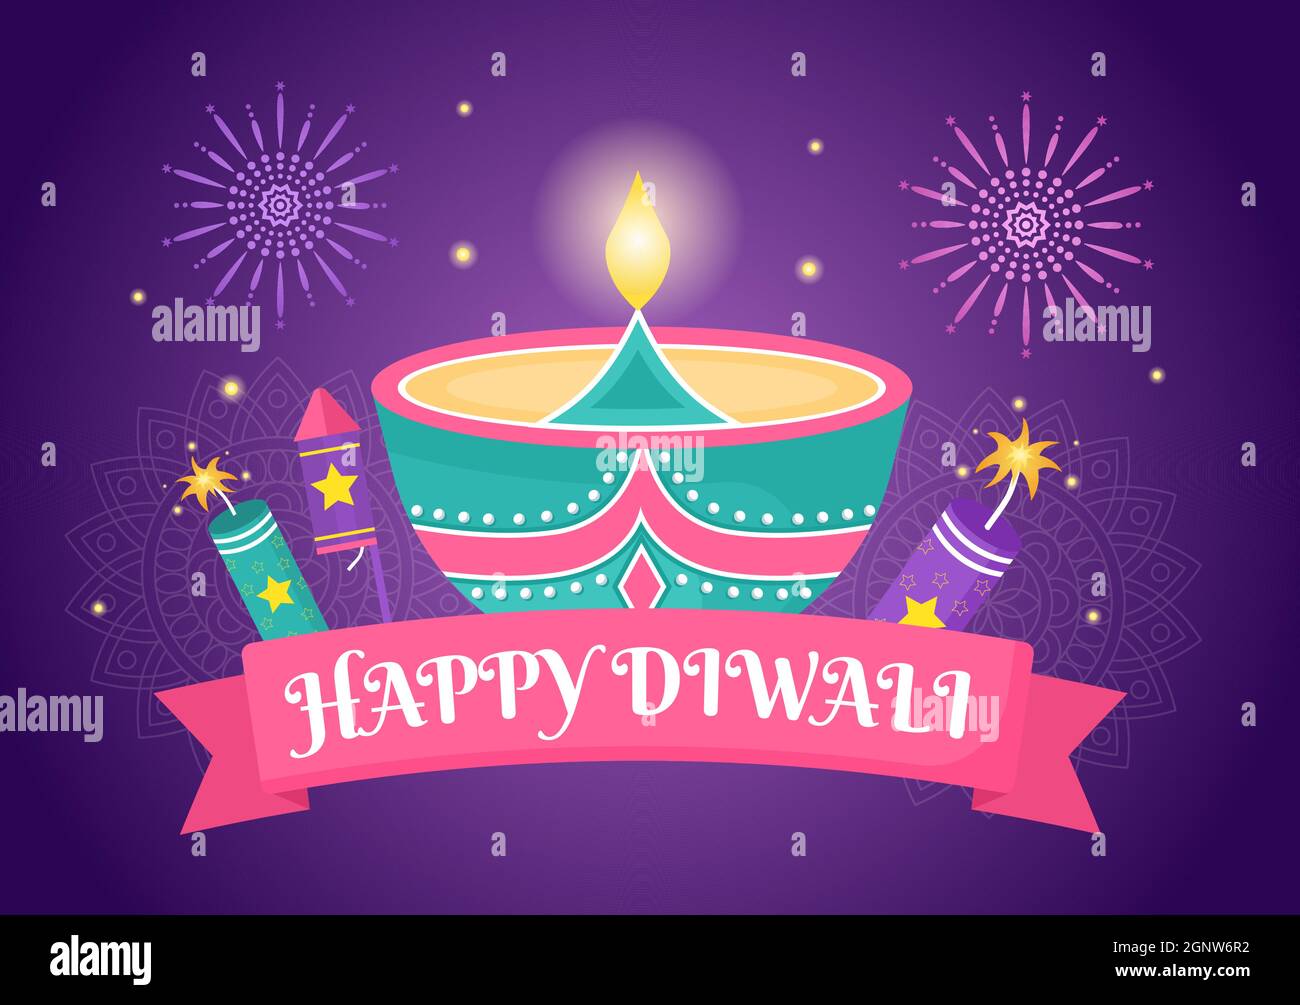 Happy Diwali Hindu Festival Background Vector Illustration with ...